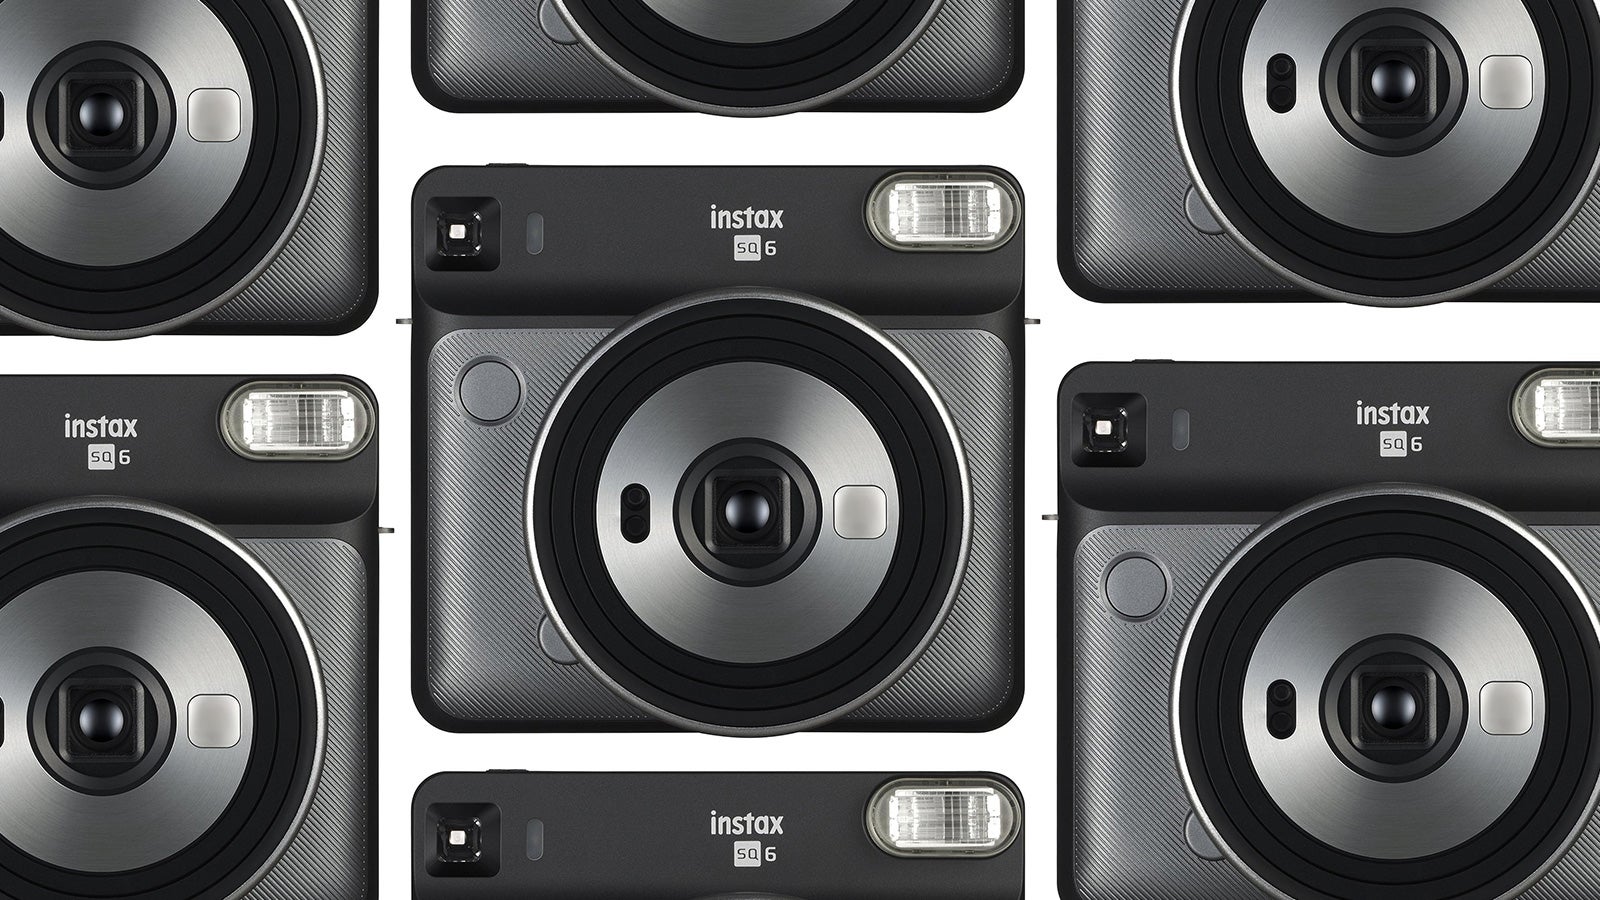 Save $40 on a Fujifilm Instax Square SQ6 instant film camera